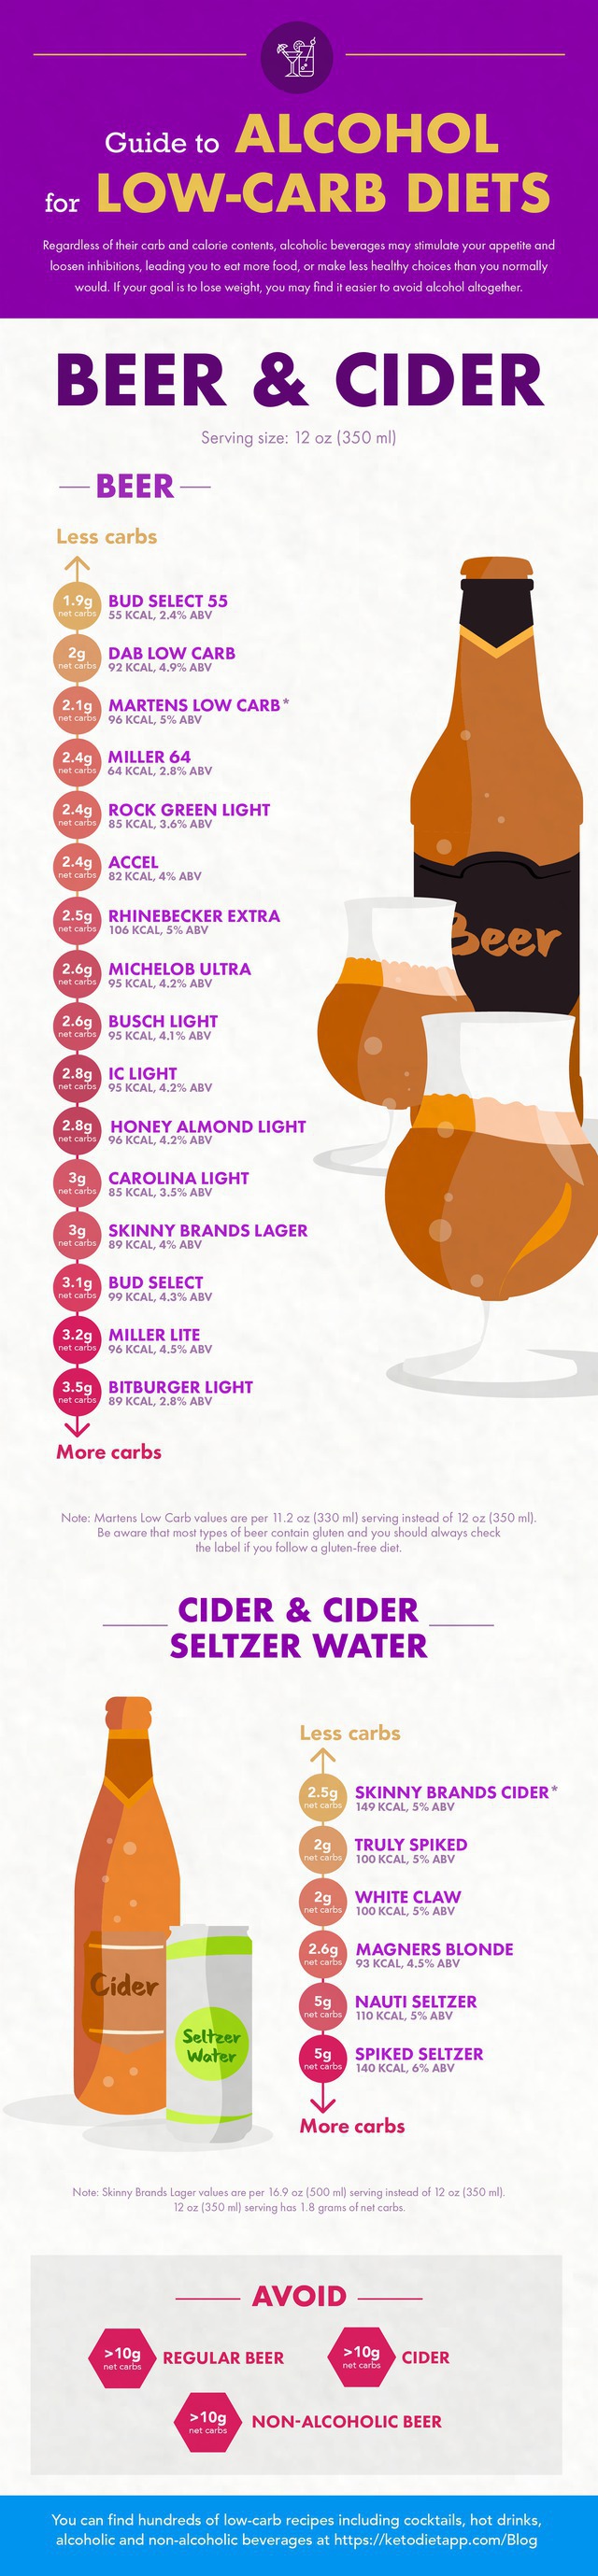 Alcohol Guide - Beer & Cider